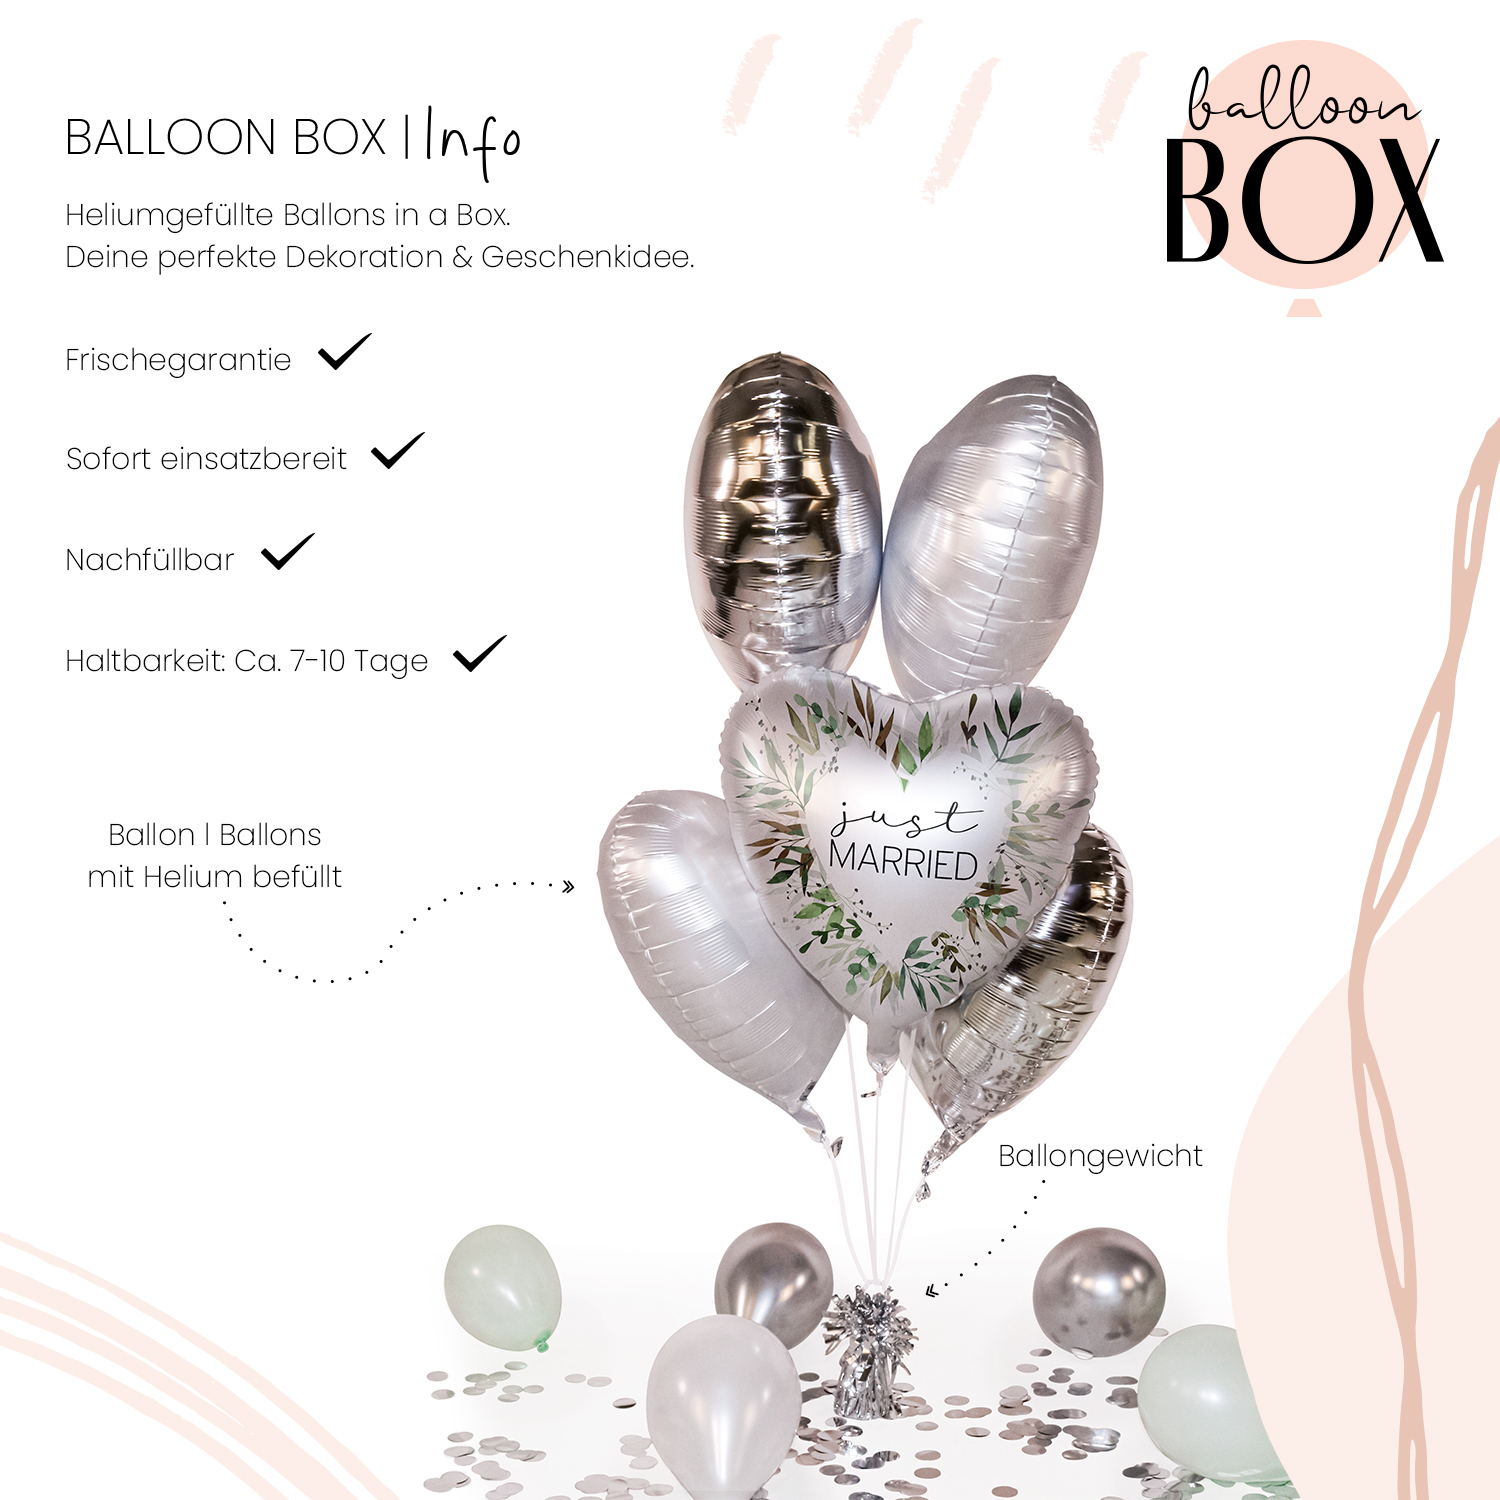 Heliumballon in a Box - Natural Greenery Wedding